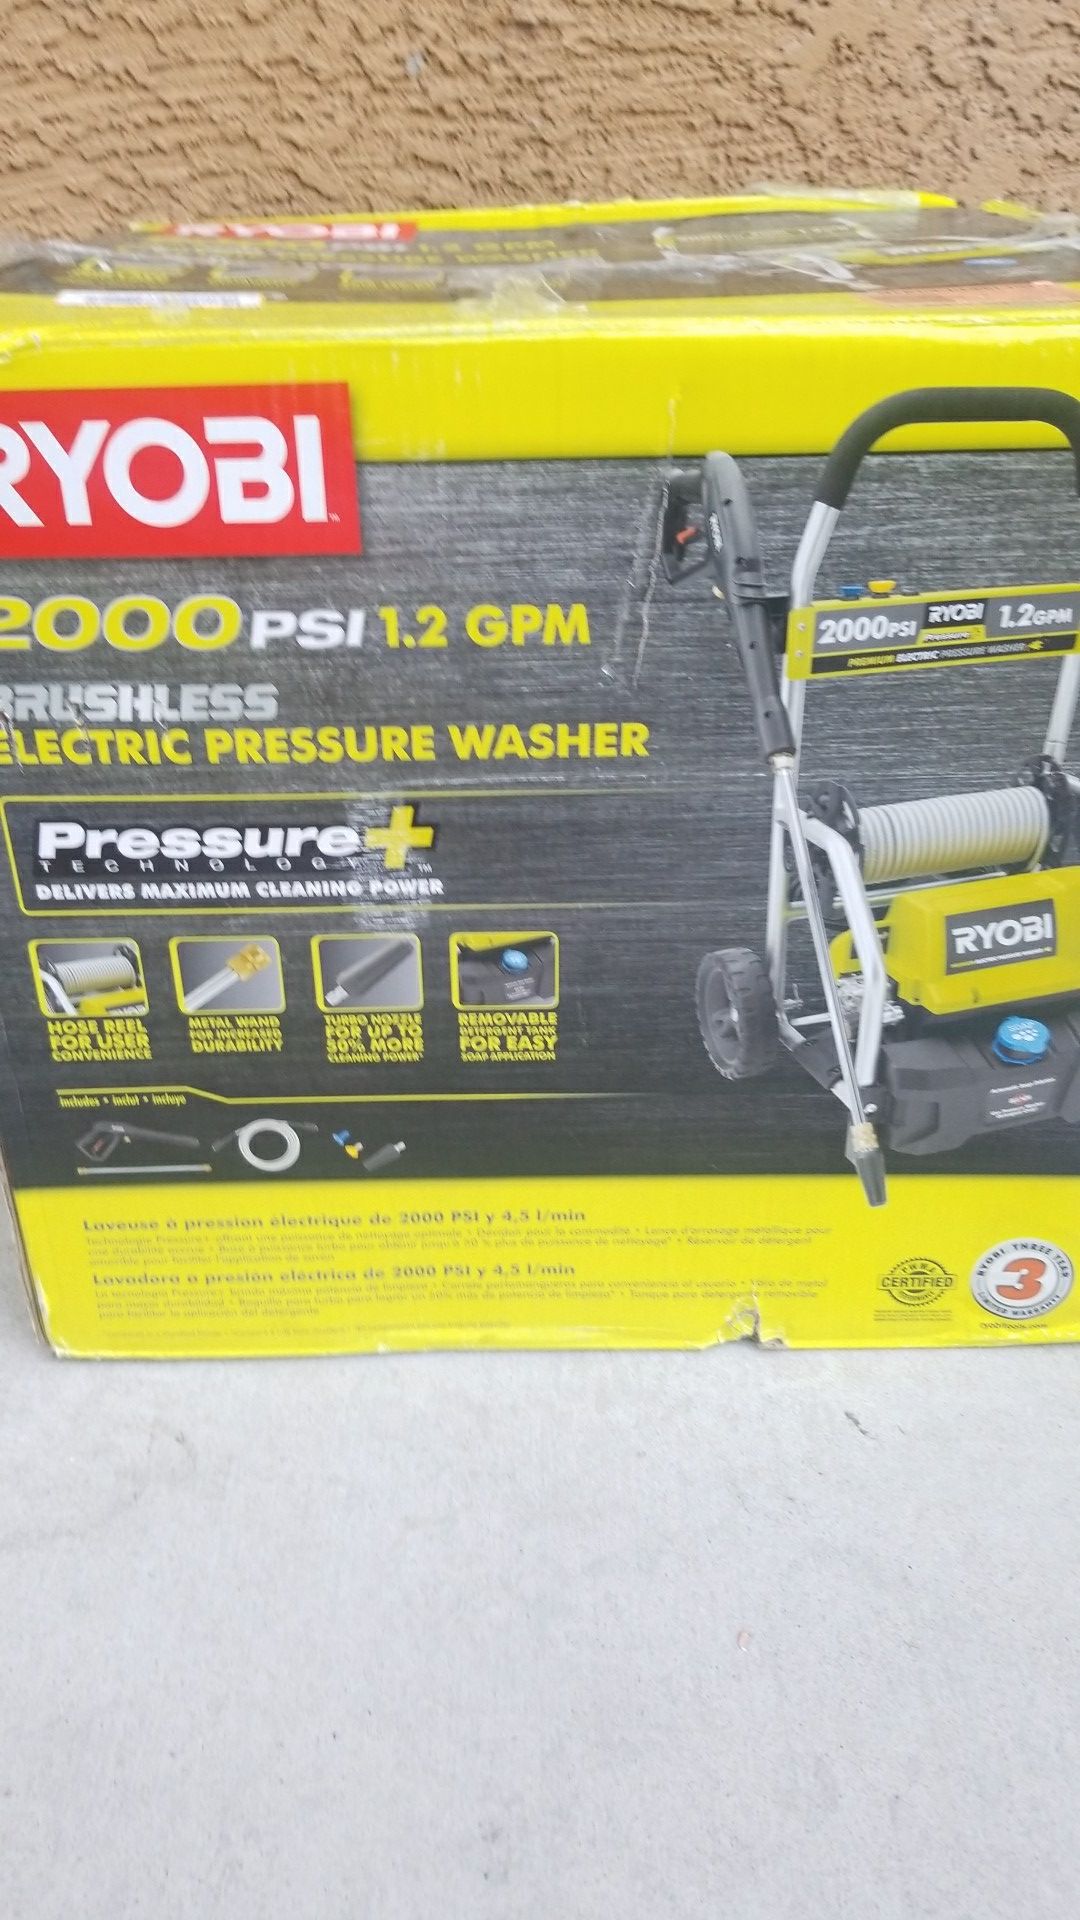 Ryobi 2000psi pressure washer